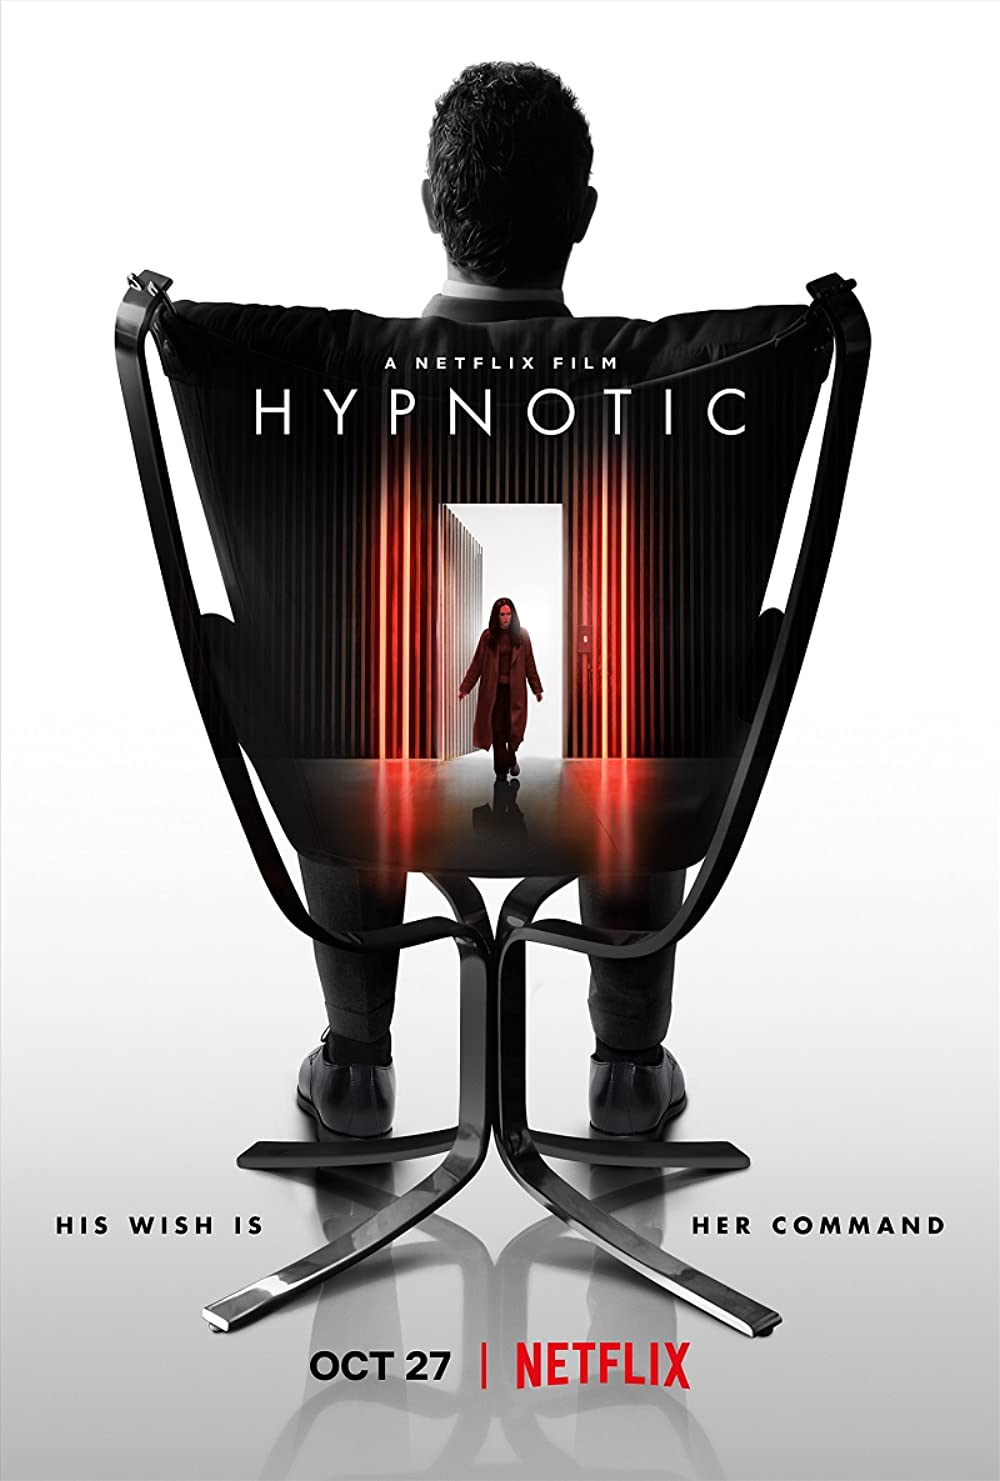 Is Hypnotic on Netflix